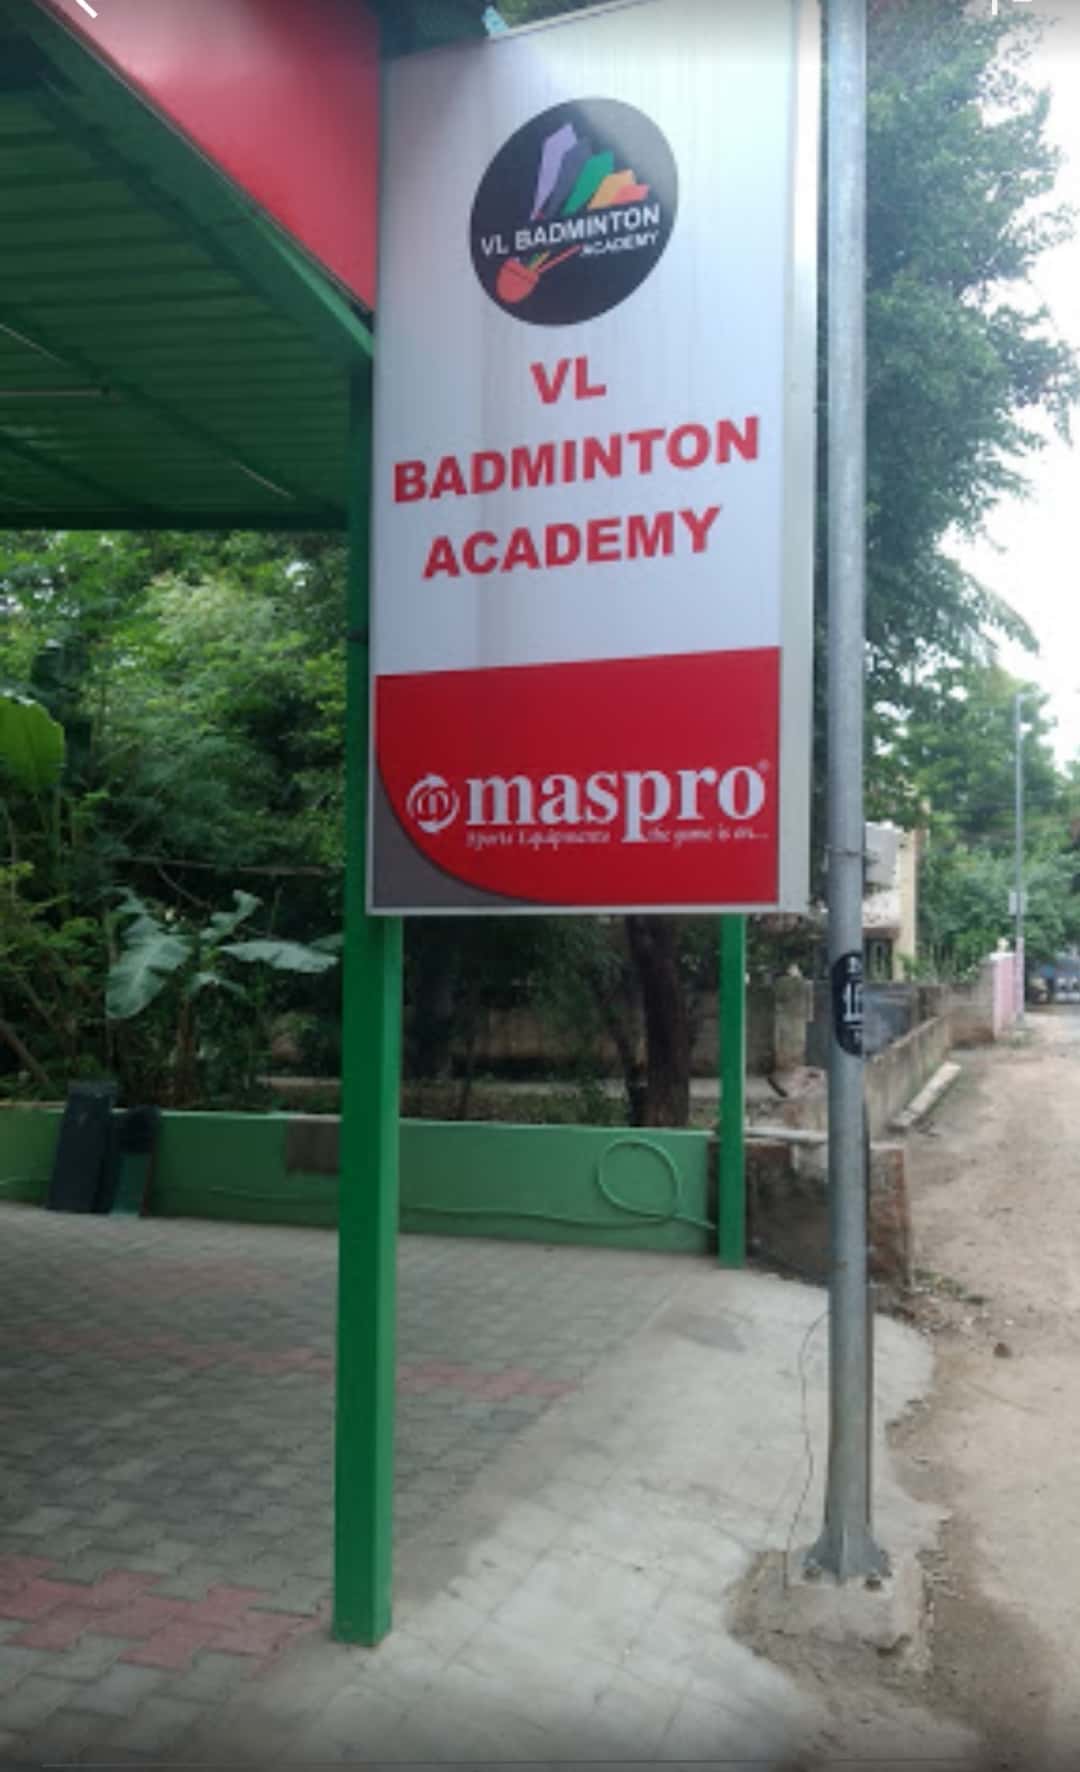 VL Badminton Academy